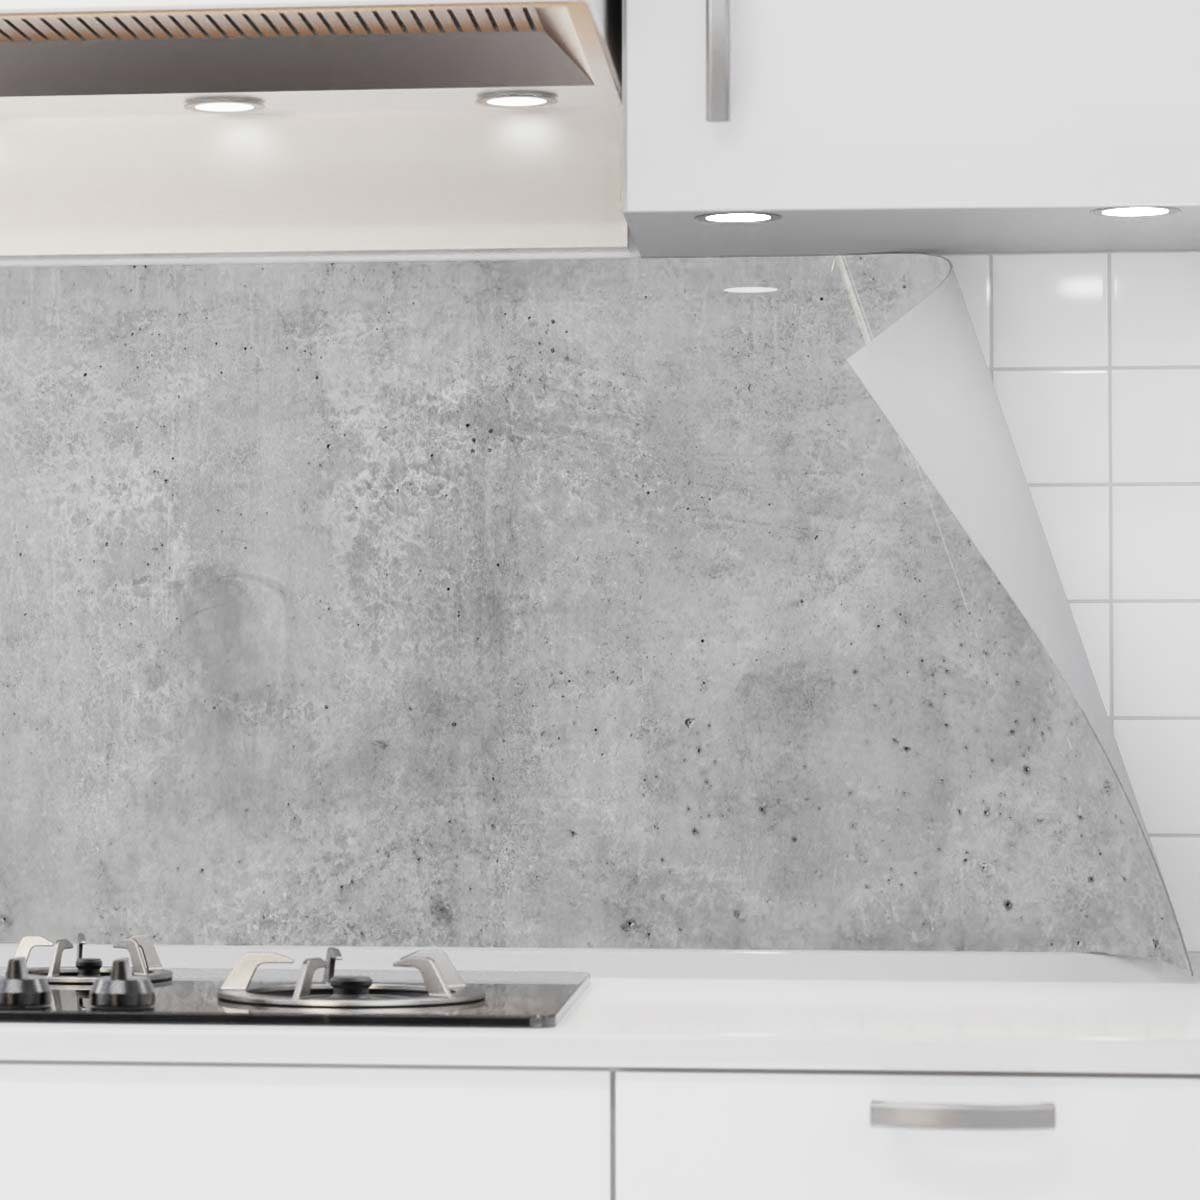 danario Küchenrückwand selbstklebend - Matt - Spritzschutz Küche - versteifte PET Folie Beton